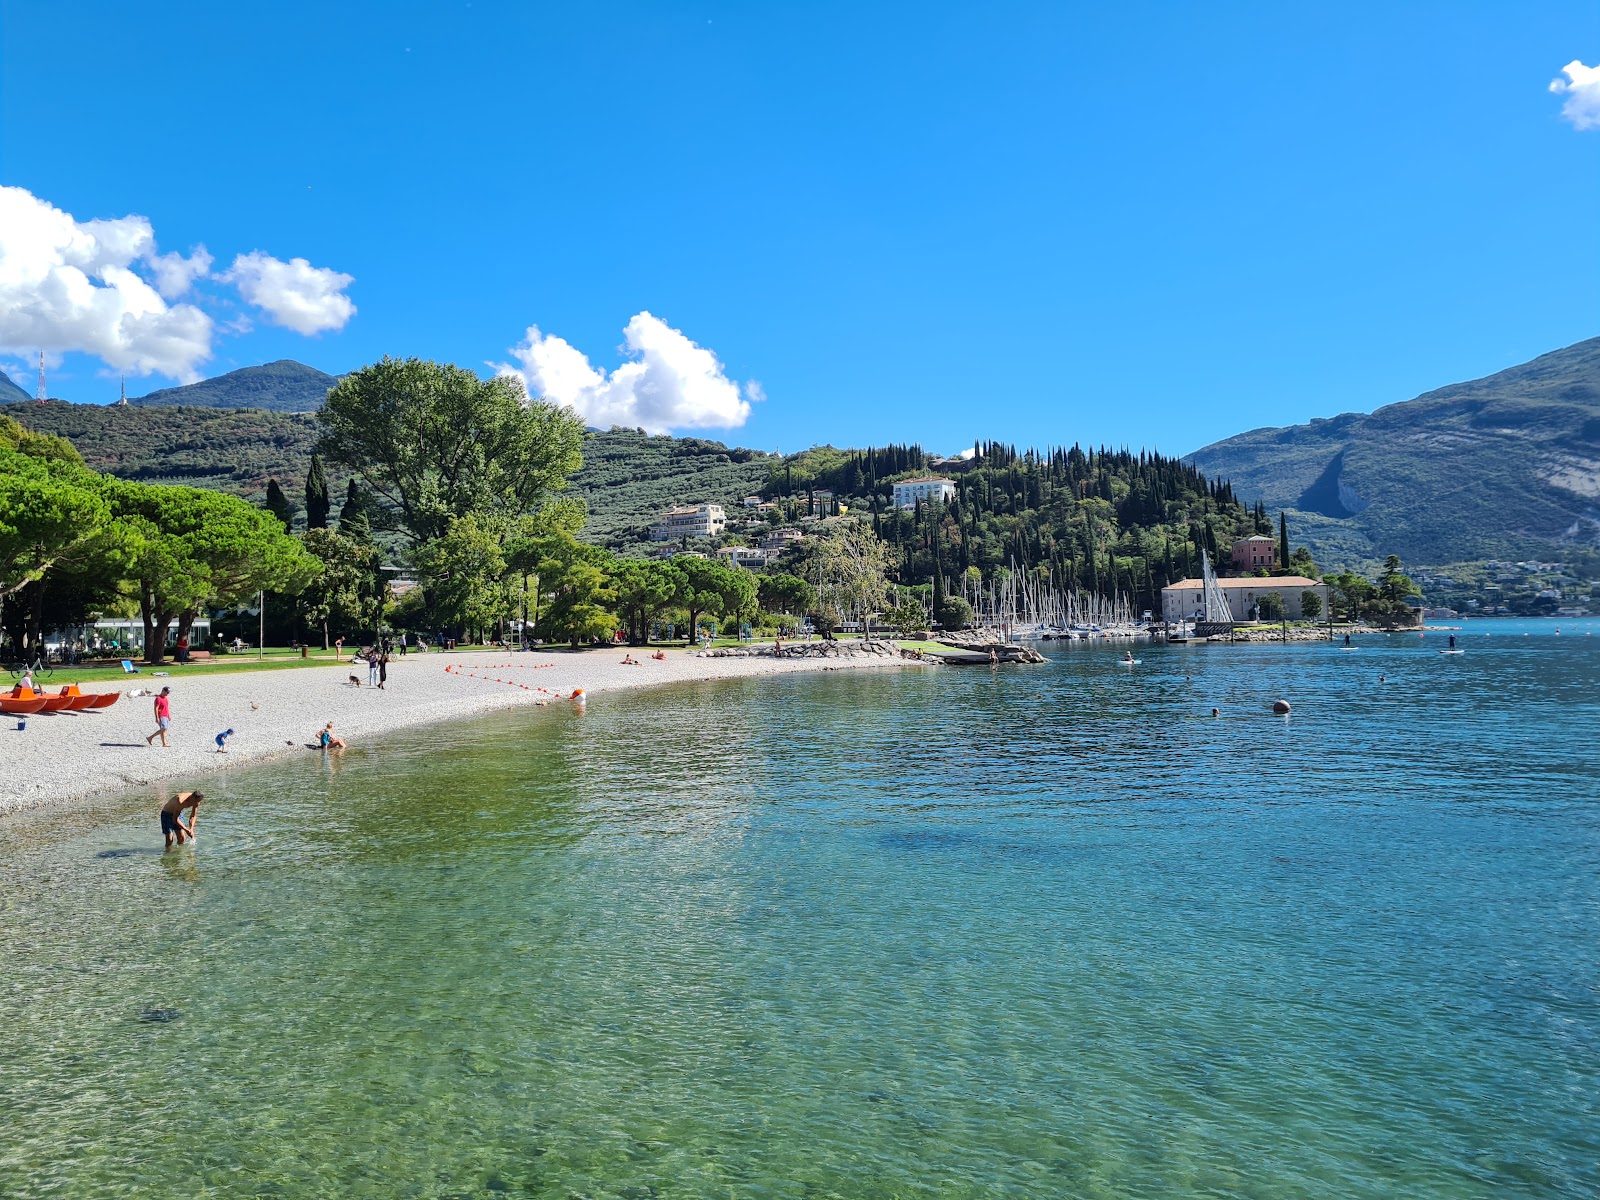 Photo of Spiaggia Pini with straight shore